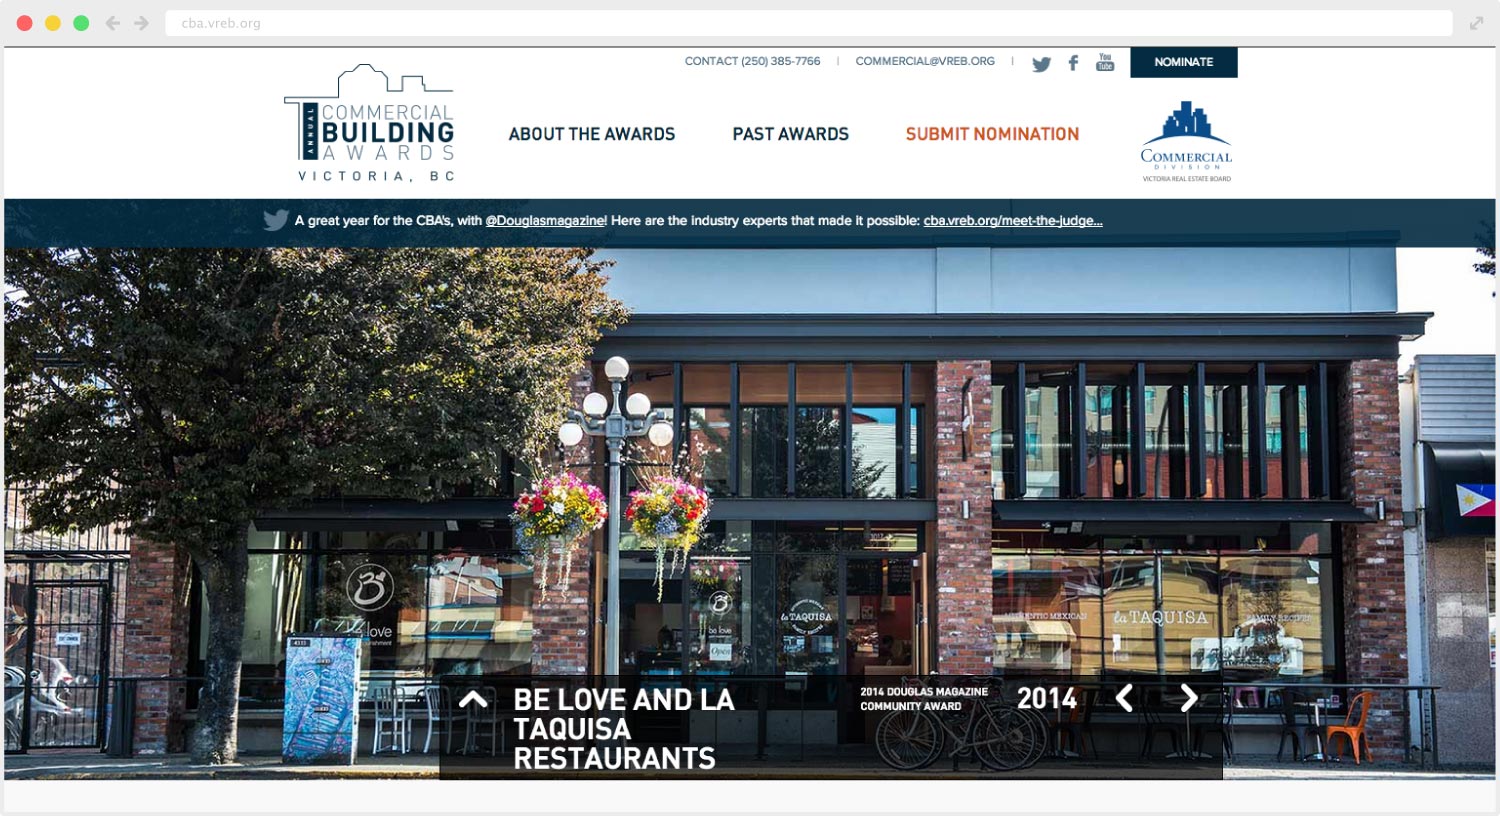 Community Building Awards website design